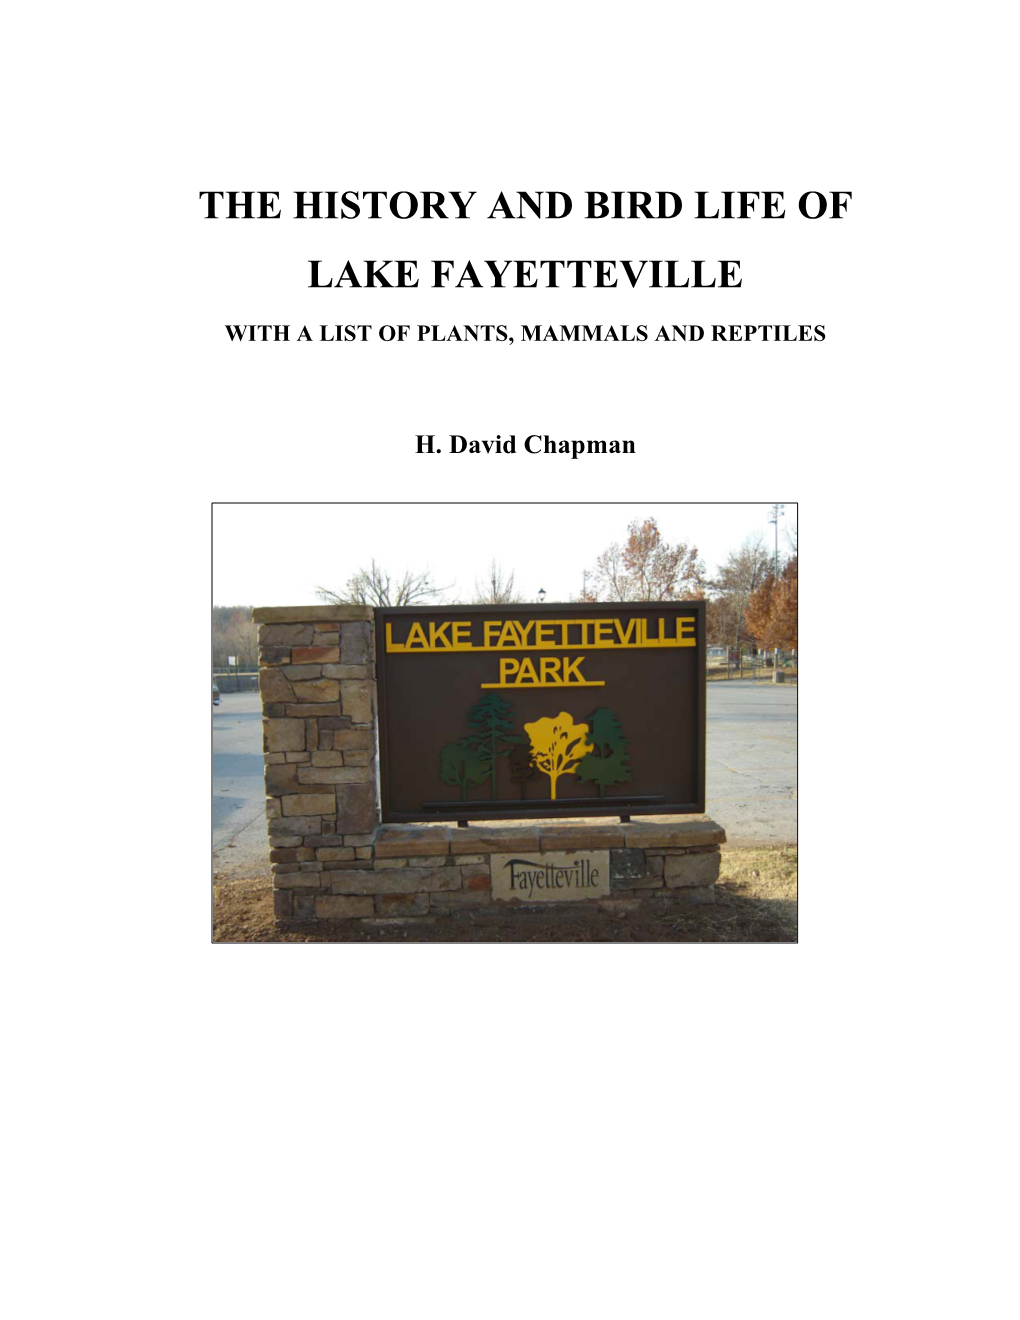 Birds of Lake Fayetteville